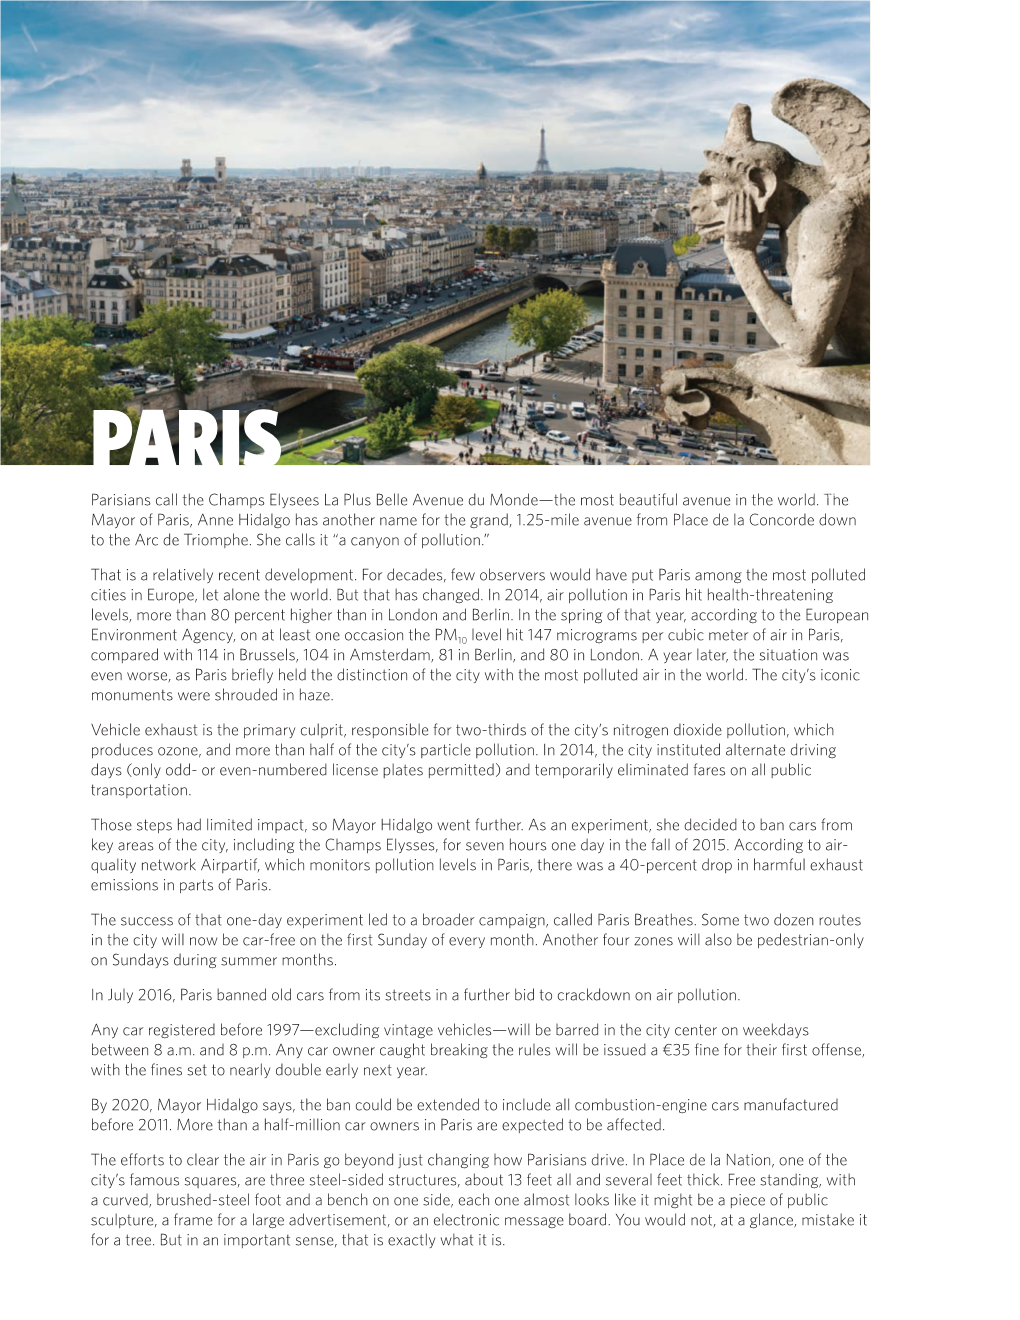 PARIS Photo © Istock, Andreygorulko Parisians Call the Champs Elysees La Plus Belle Avenue Du Monde—The Most Beautiful Avenue in the World